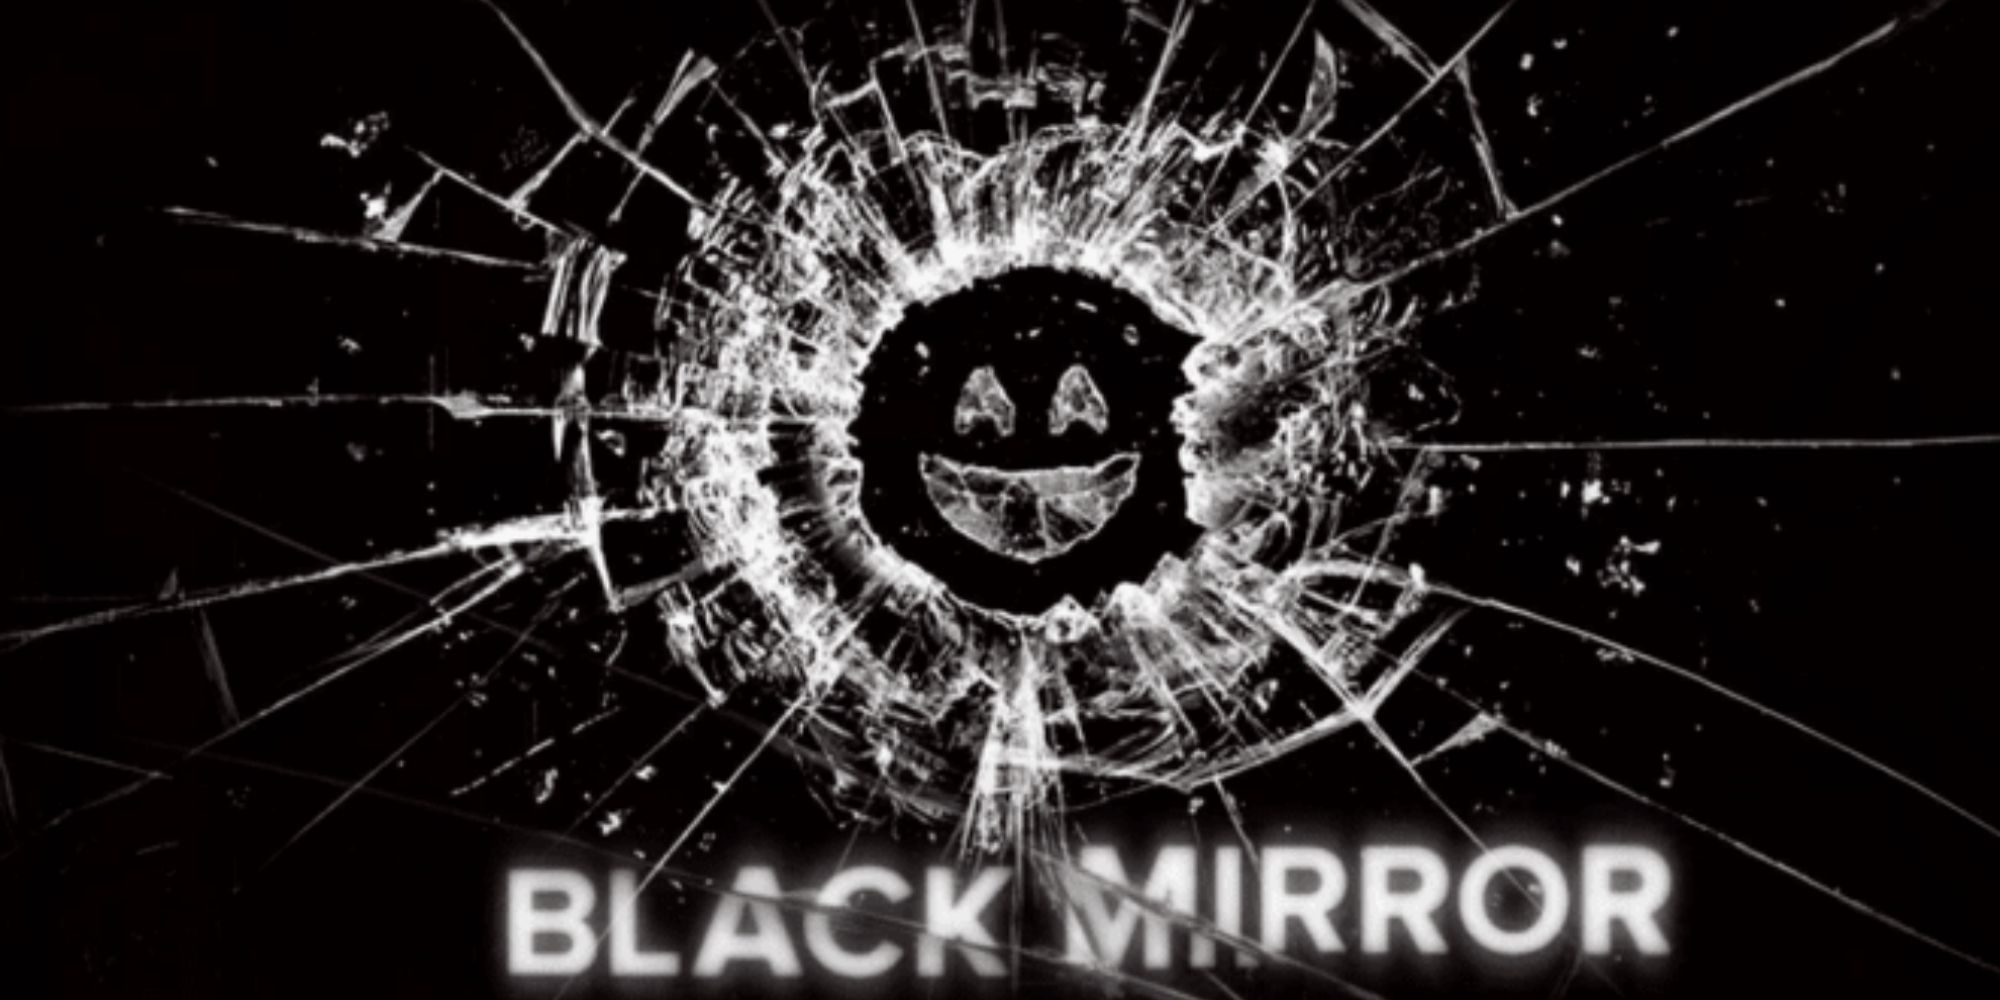 Black Mirror Episodes Feature Image